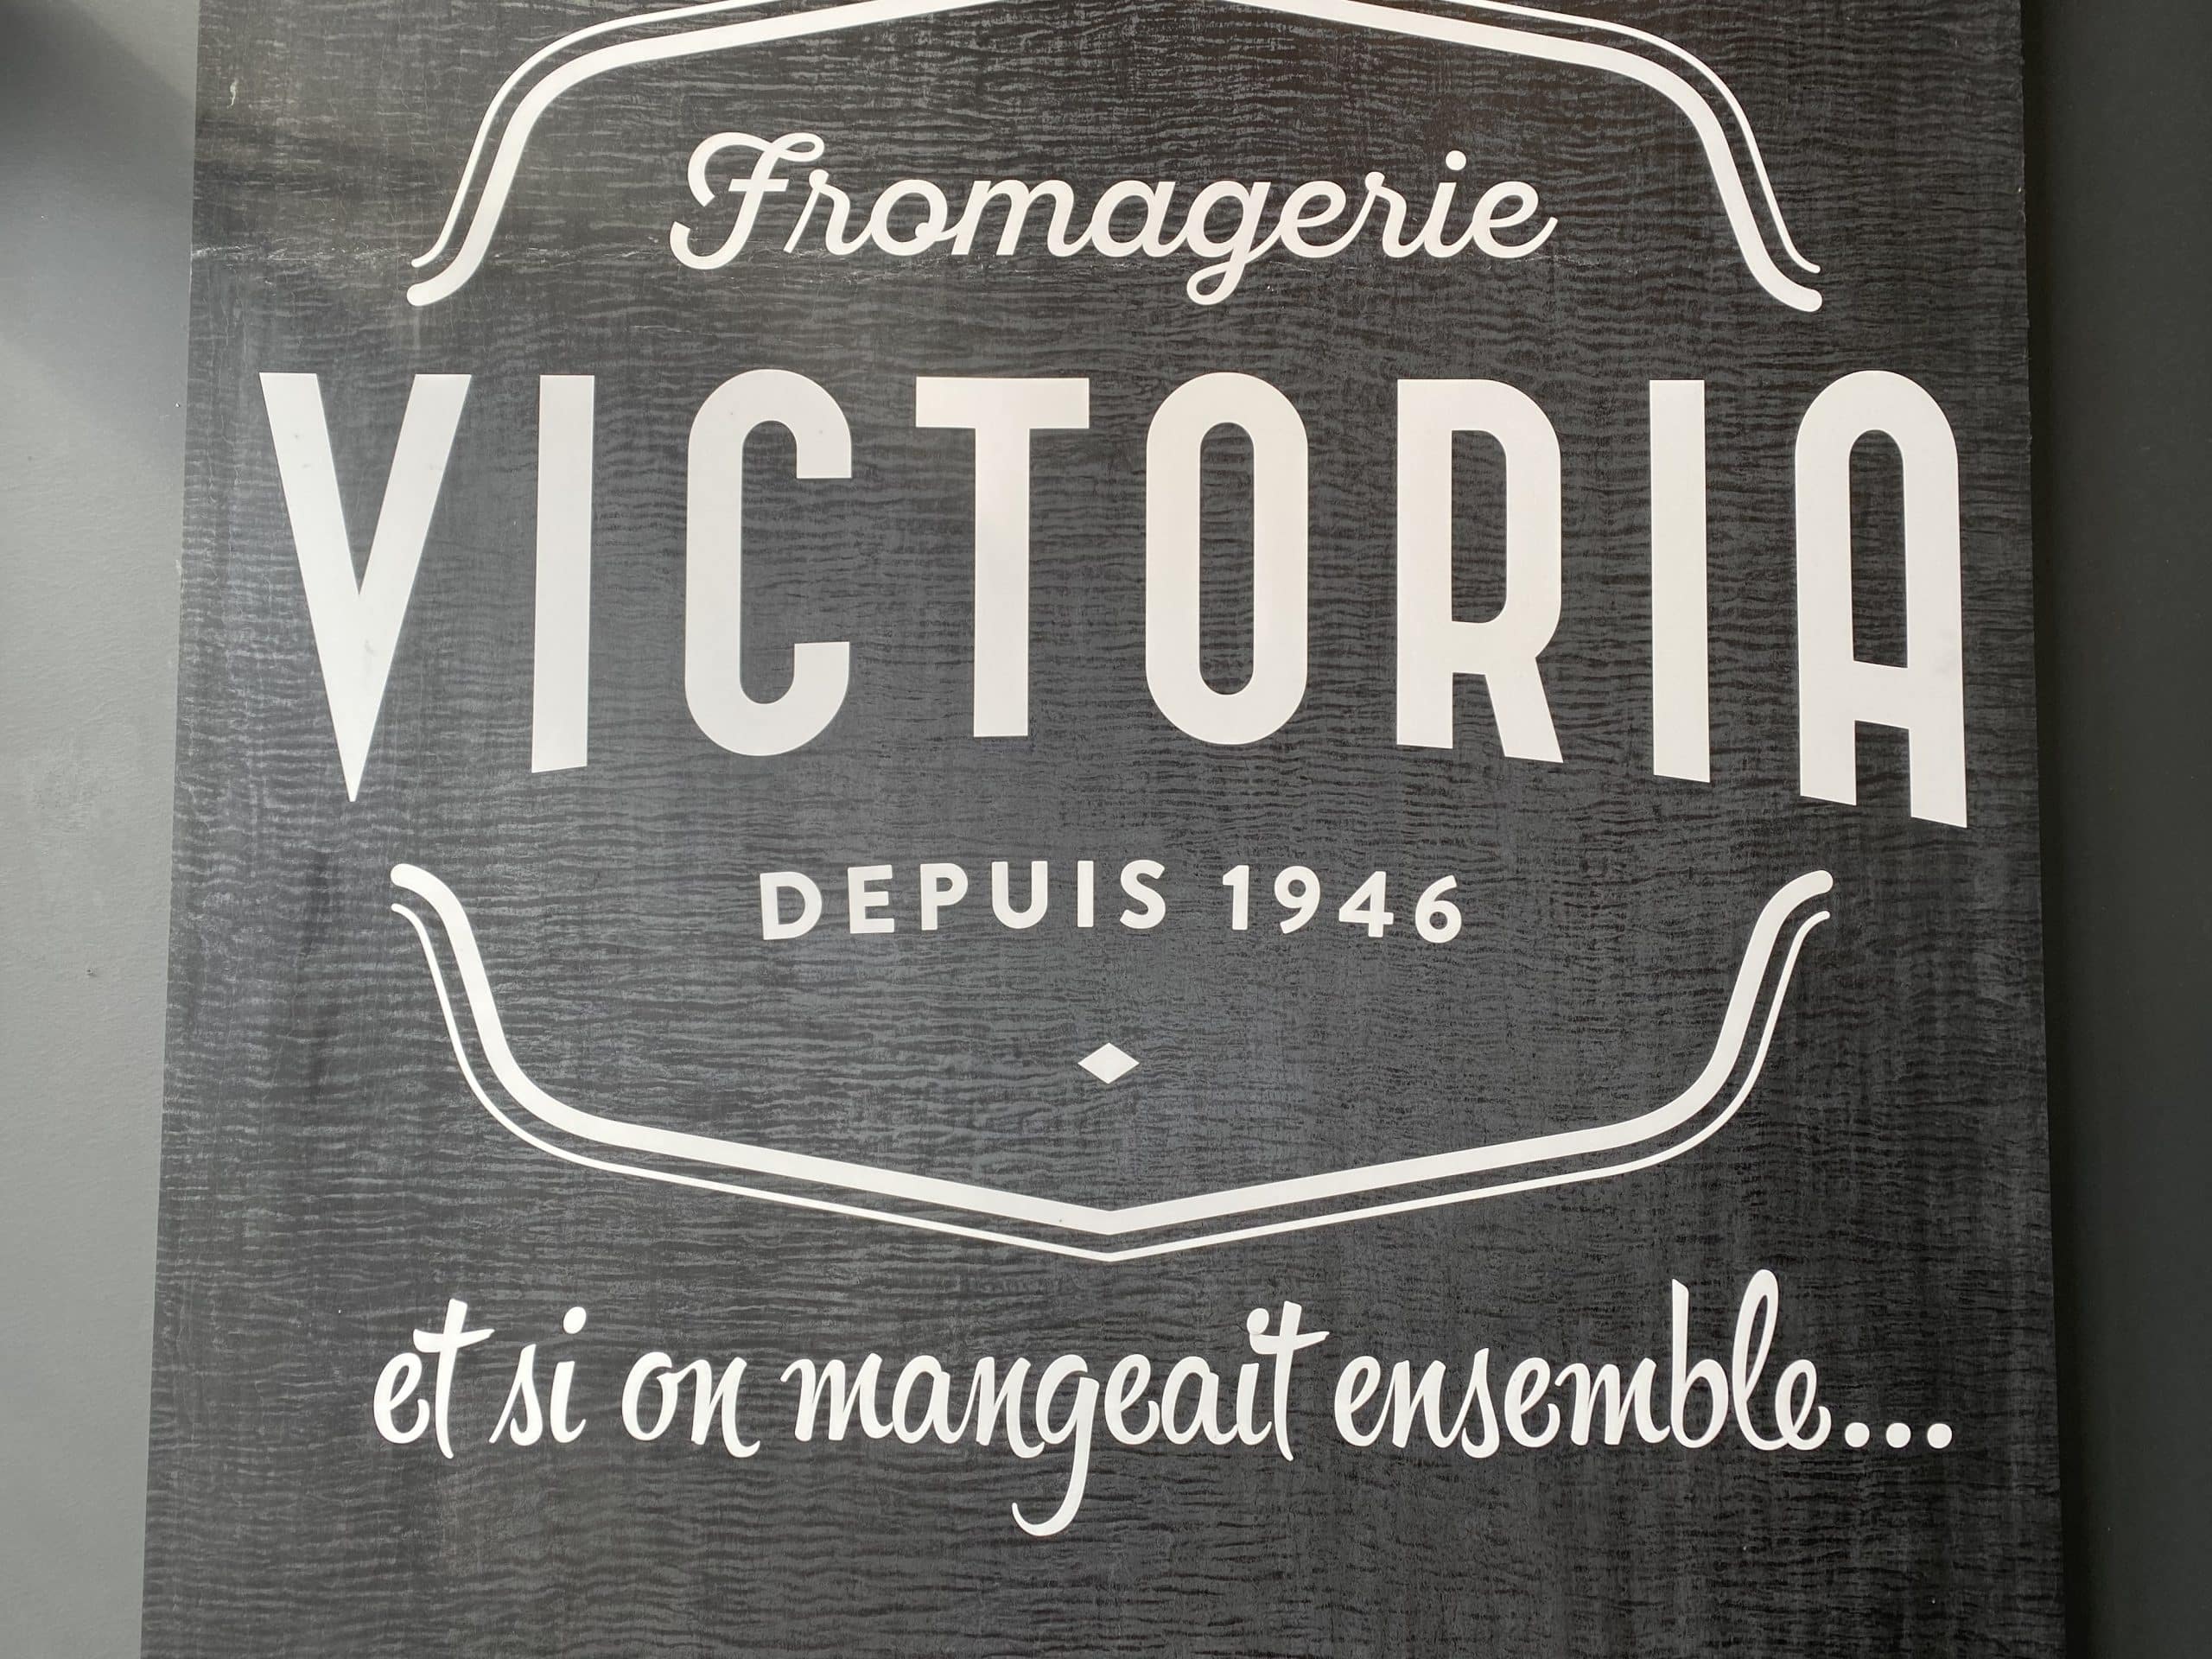 La Fromagerie Victoria